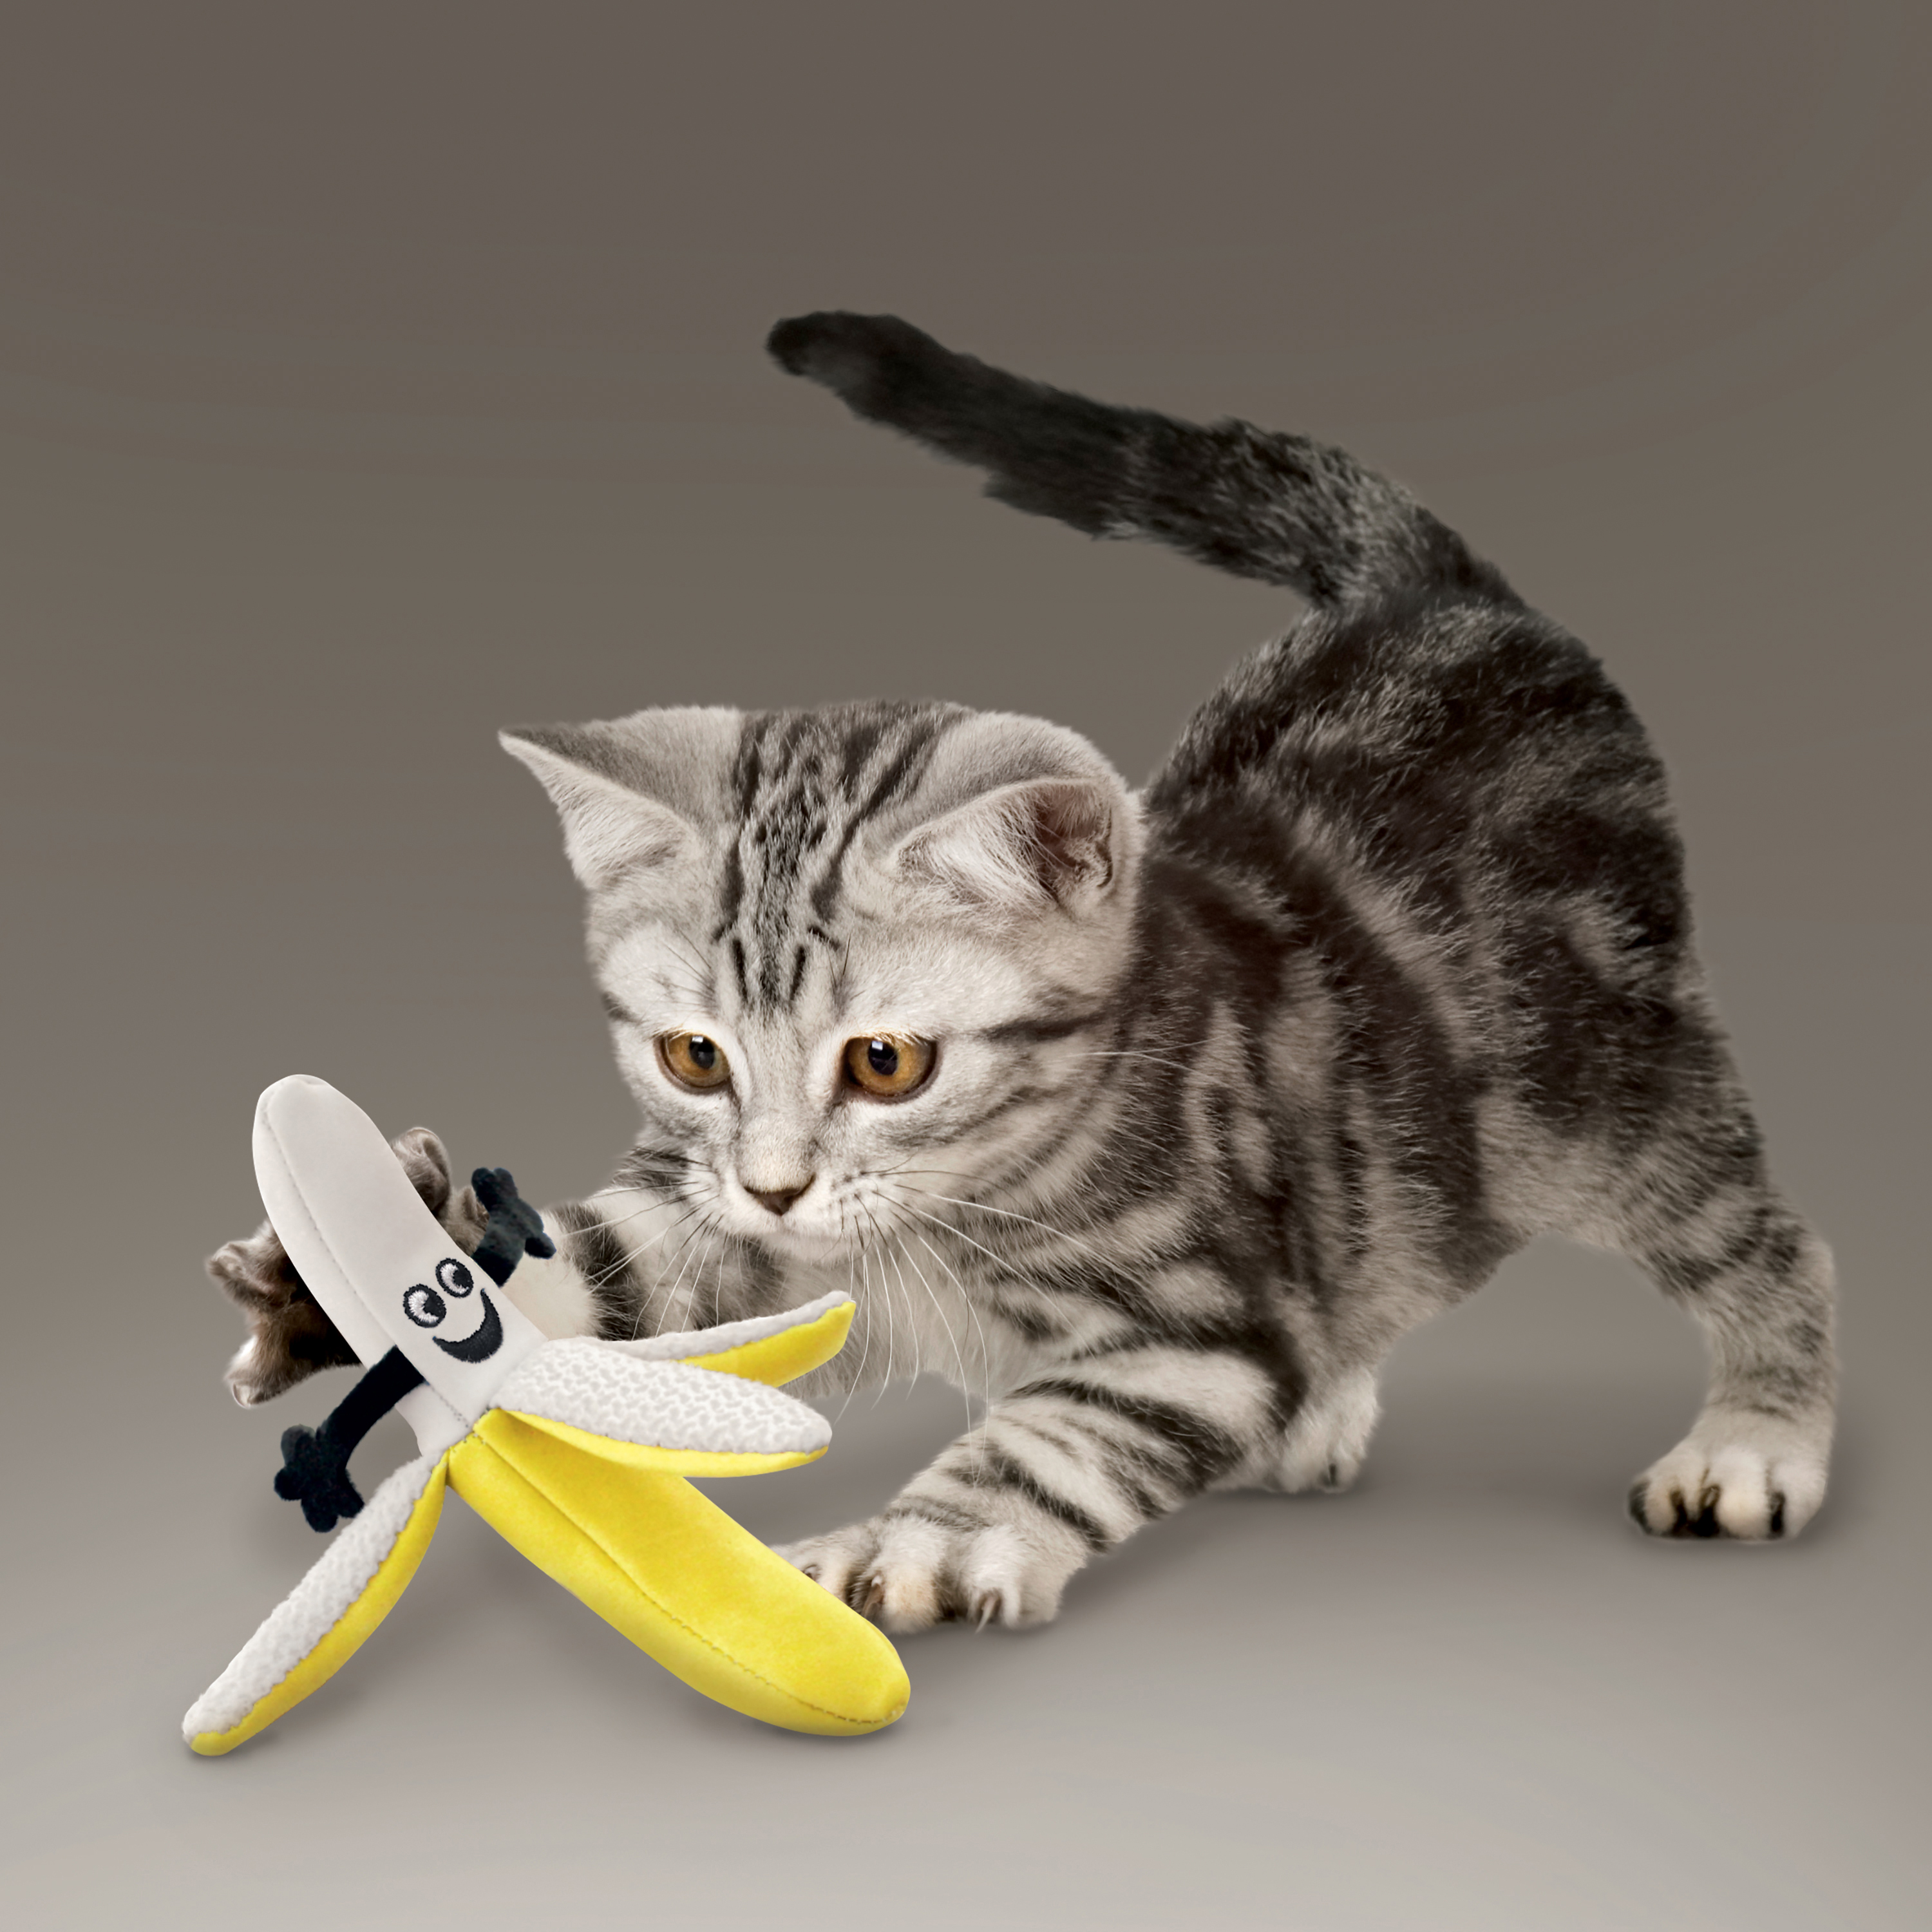 Better Buzz Banana lifestyle product image